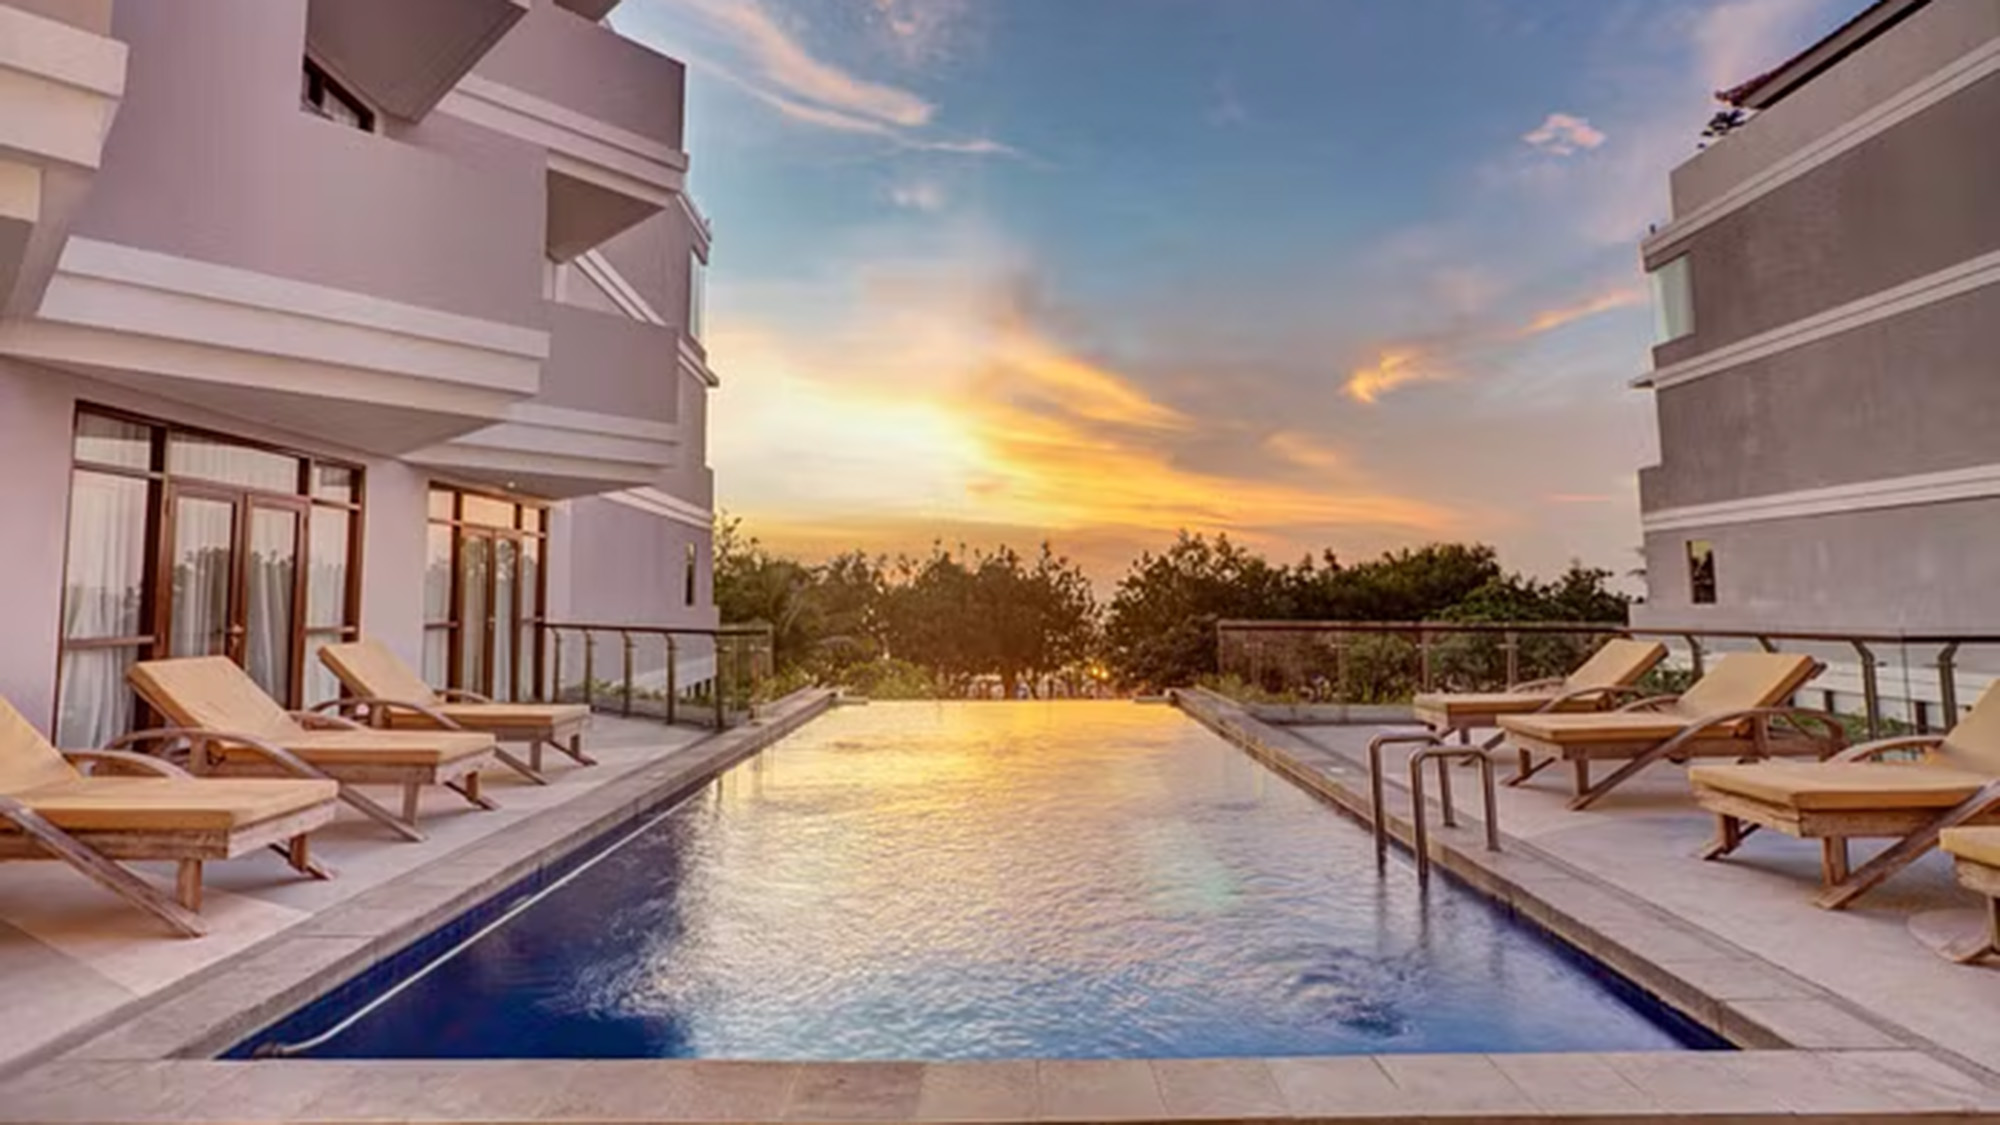 Wyndham Garden Kuta Beach Bali sunset outdoor pool